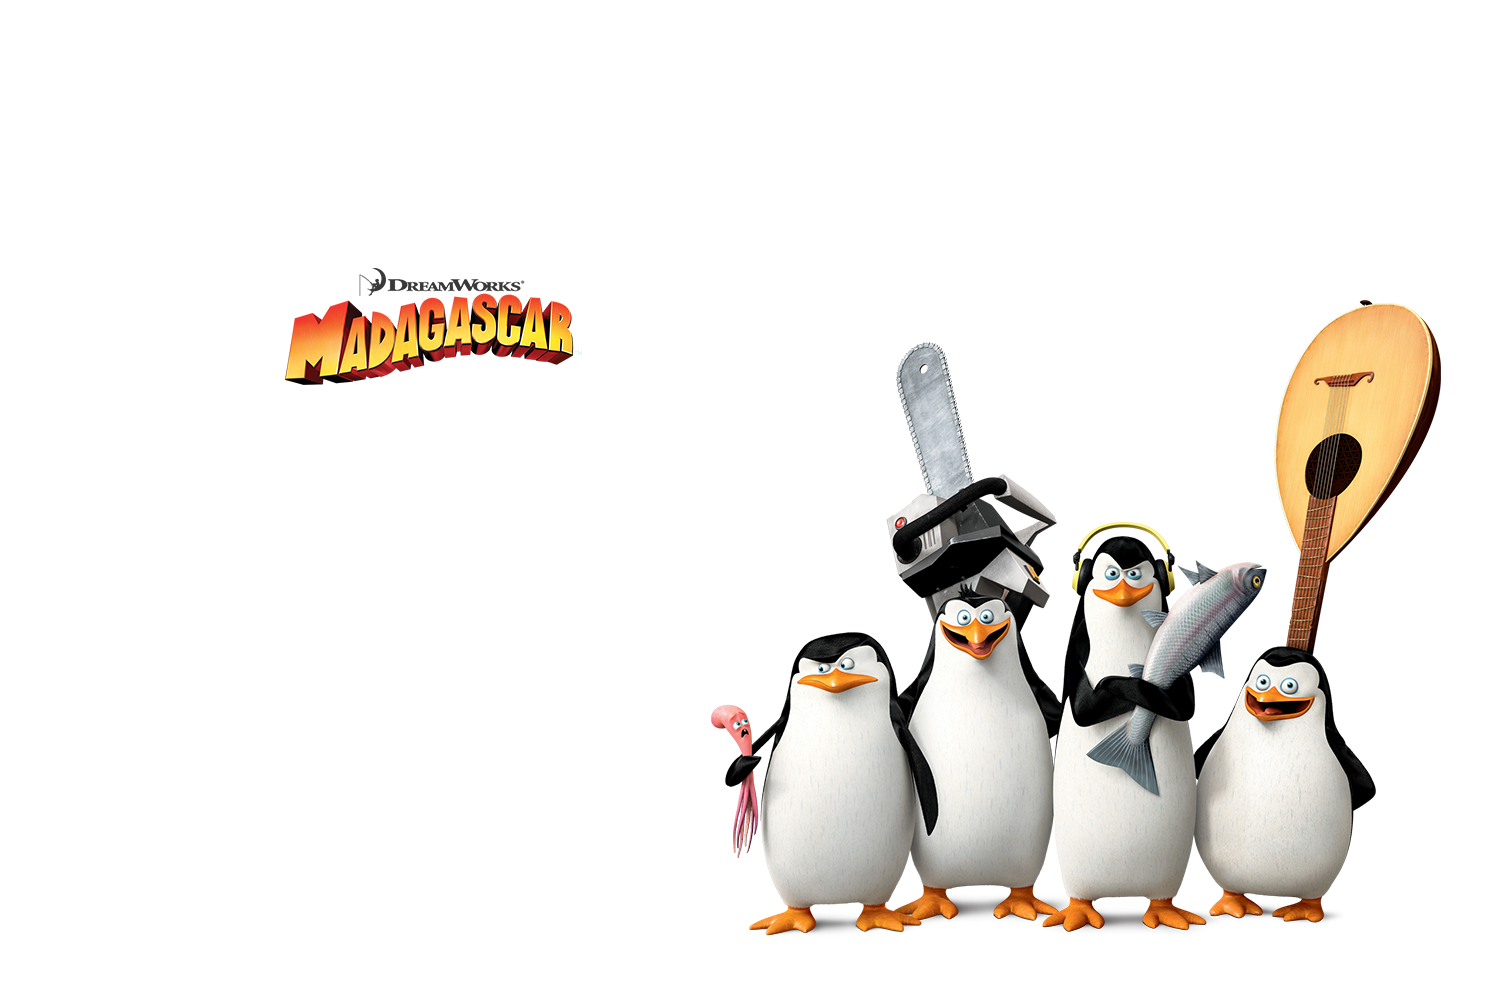 penguin clipart villain